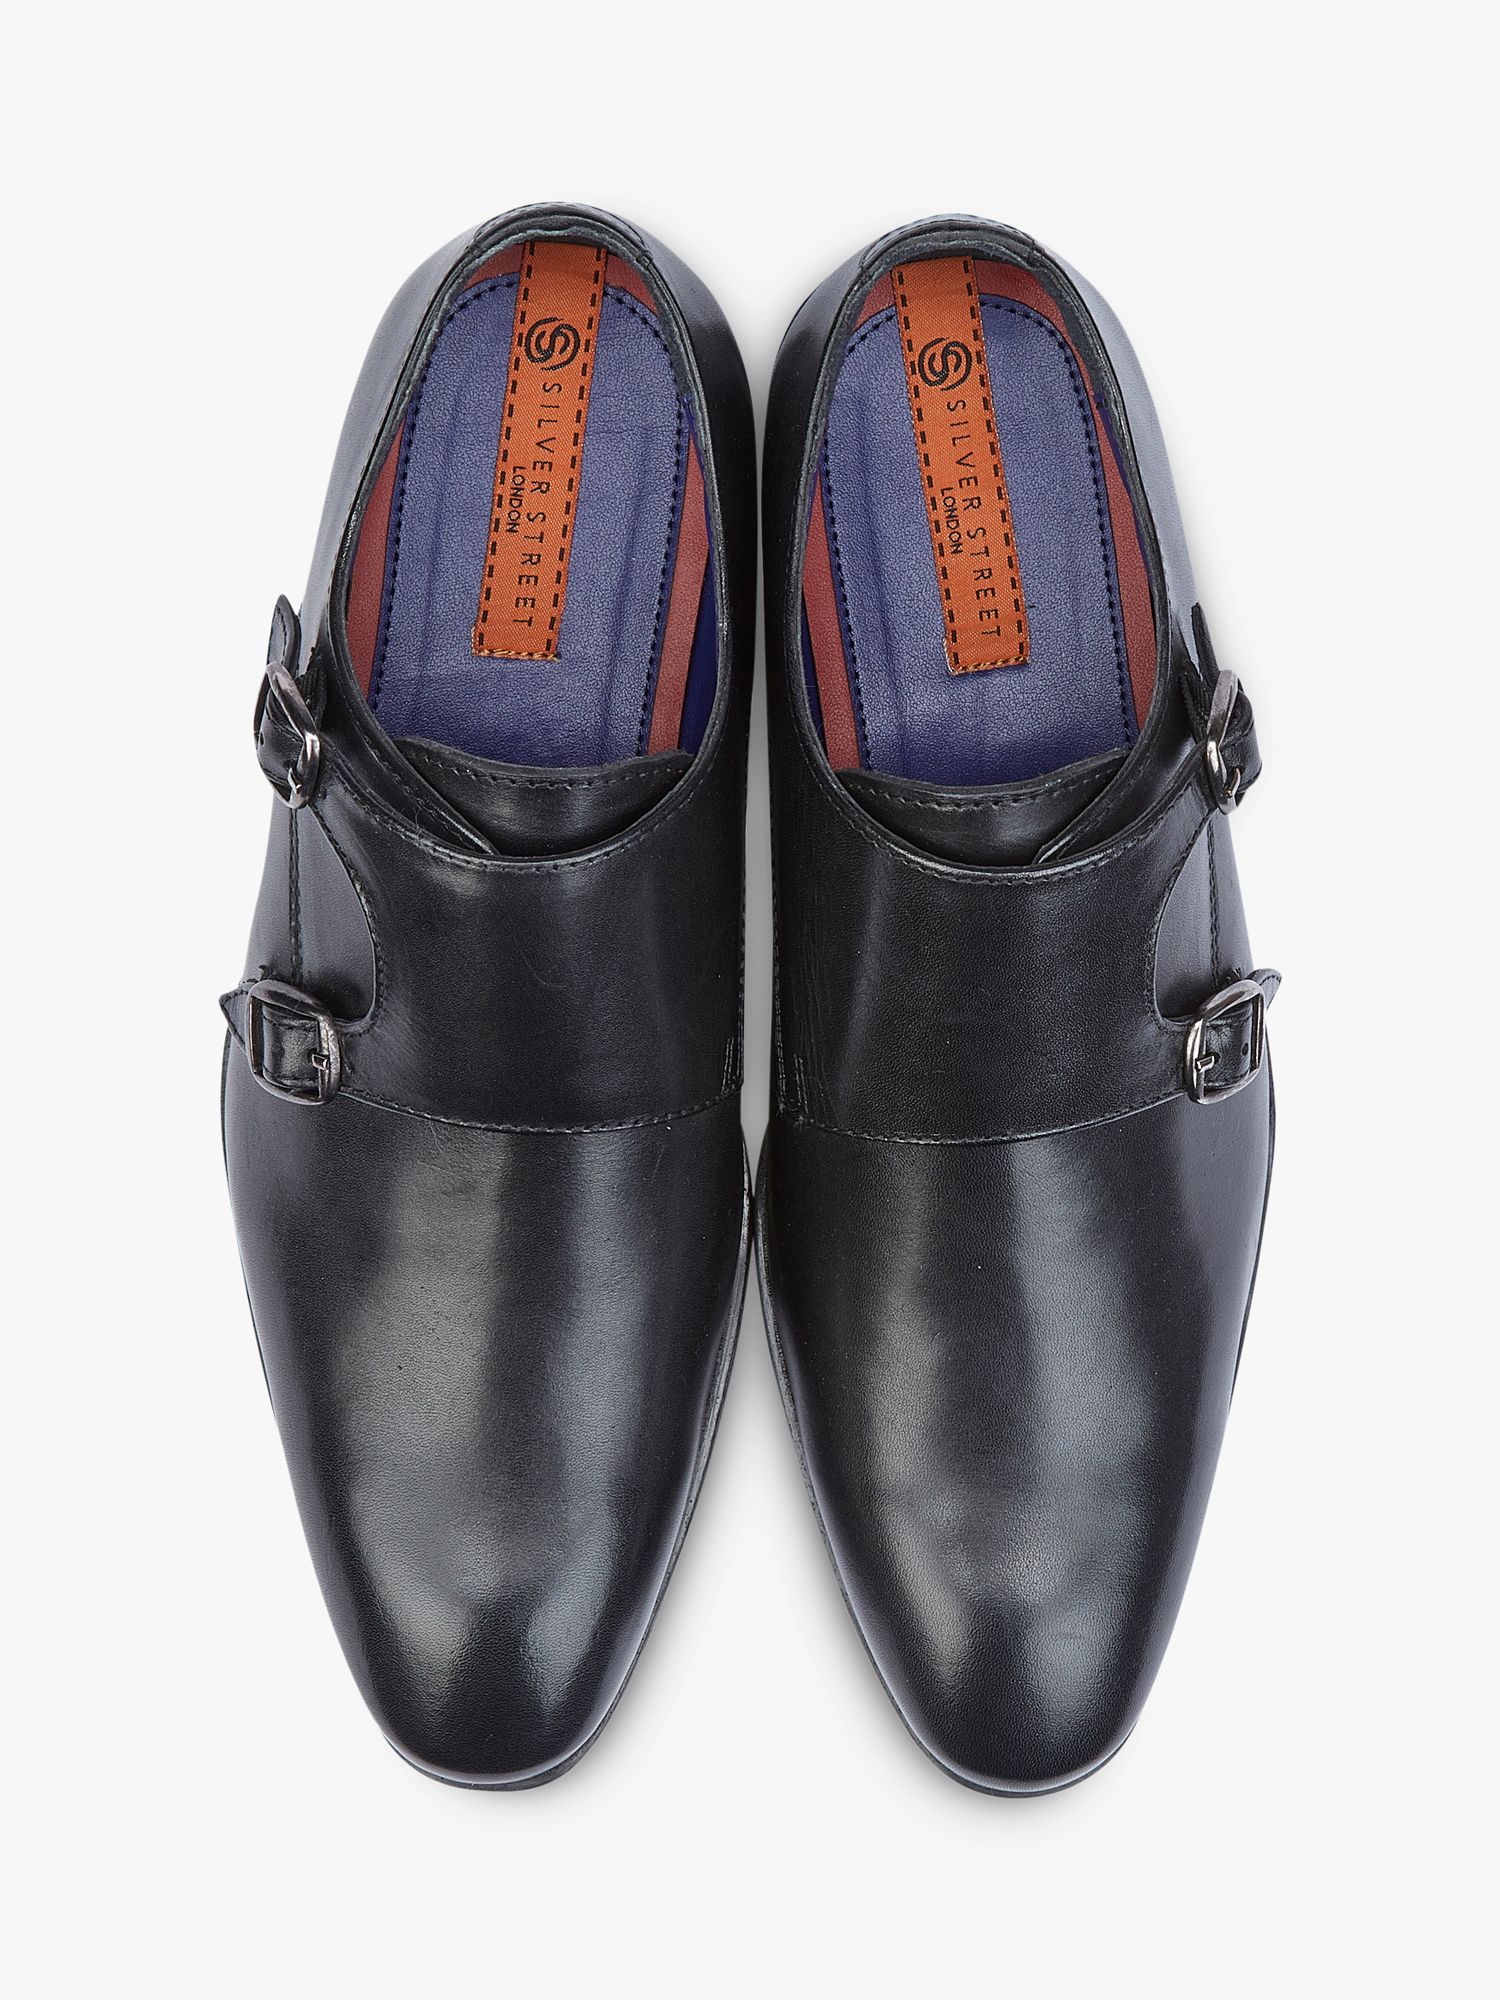 Silver Street London Bourne Leather Monk Shoes, Black, 7